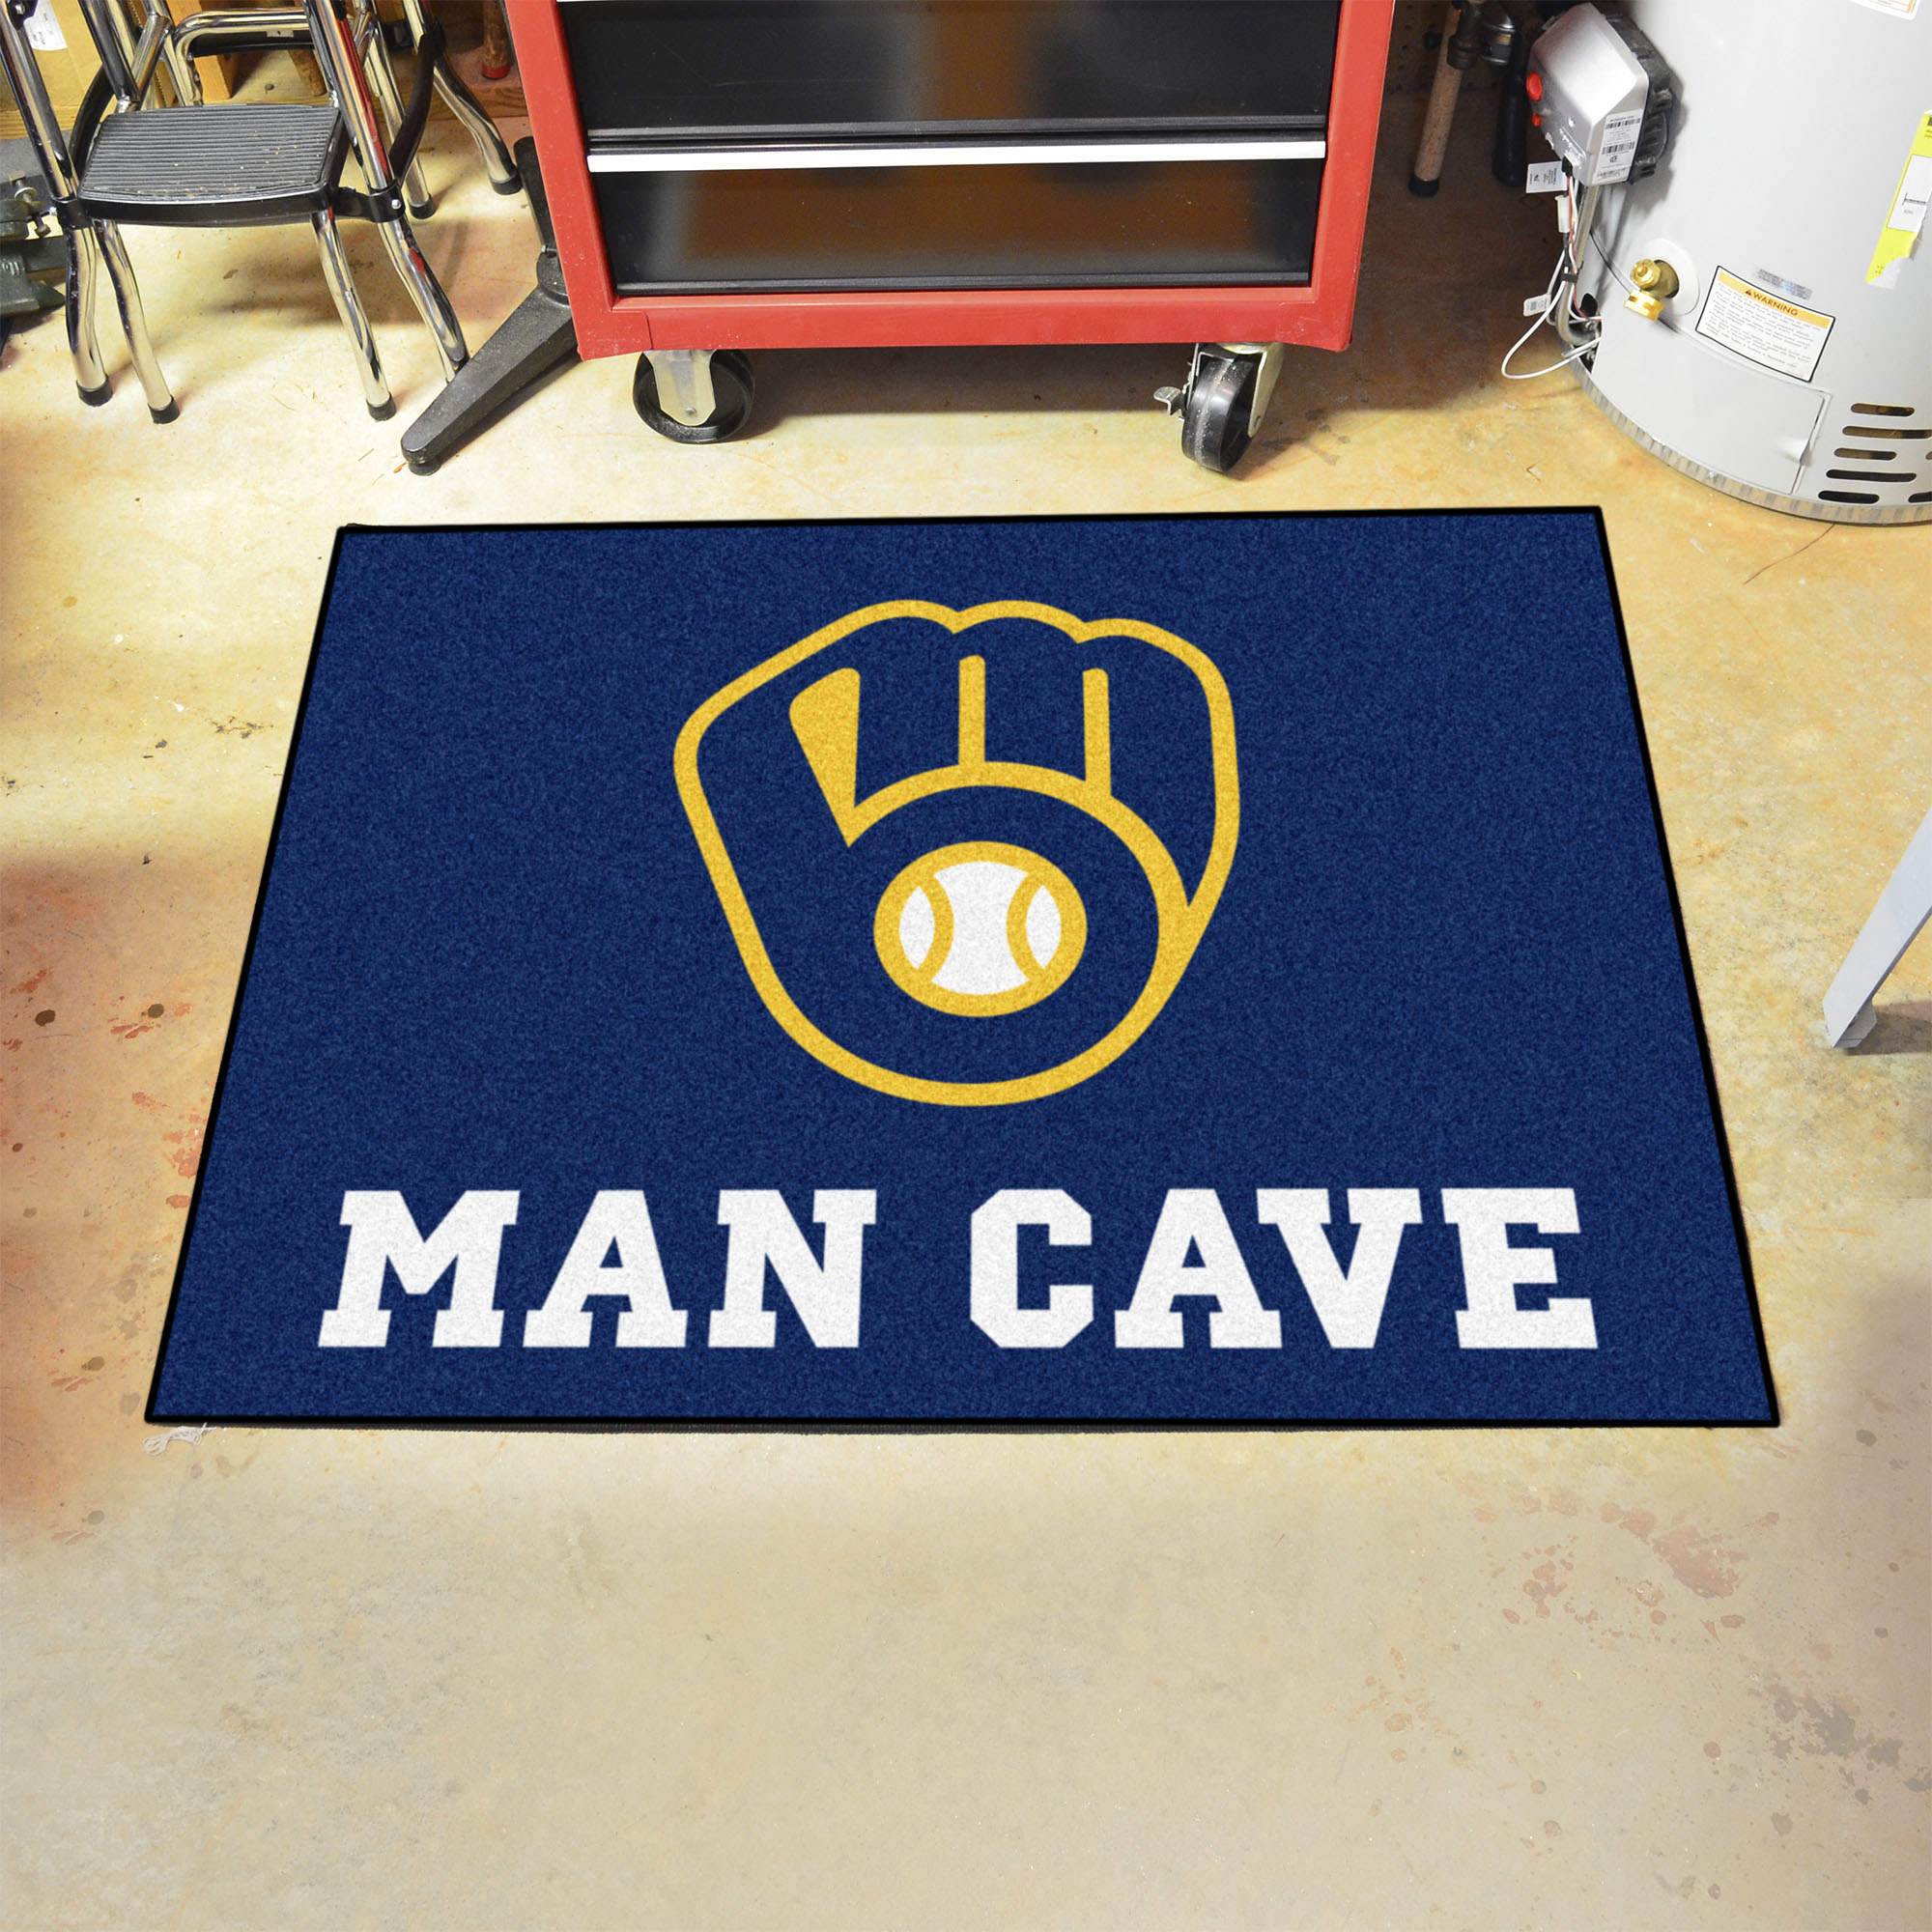  FANMATS MLB - Miami Marlins Man Cave Tailgater Rug 5